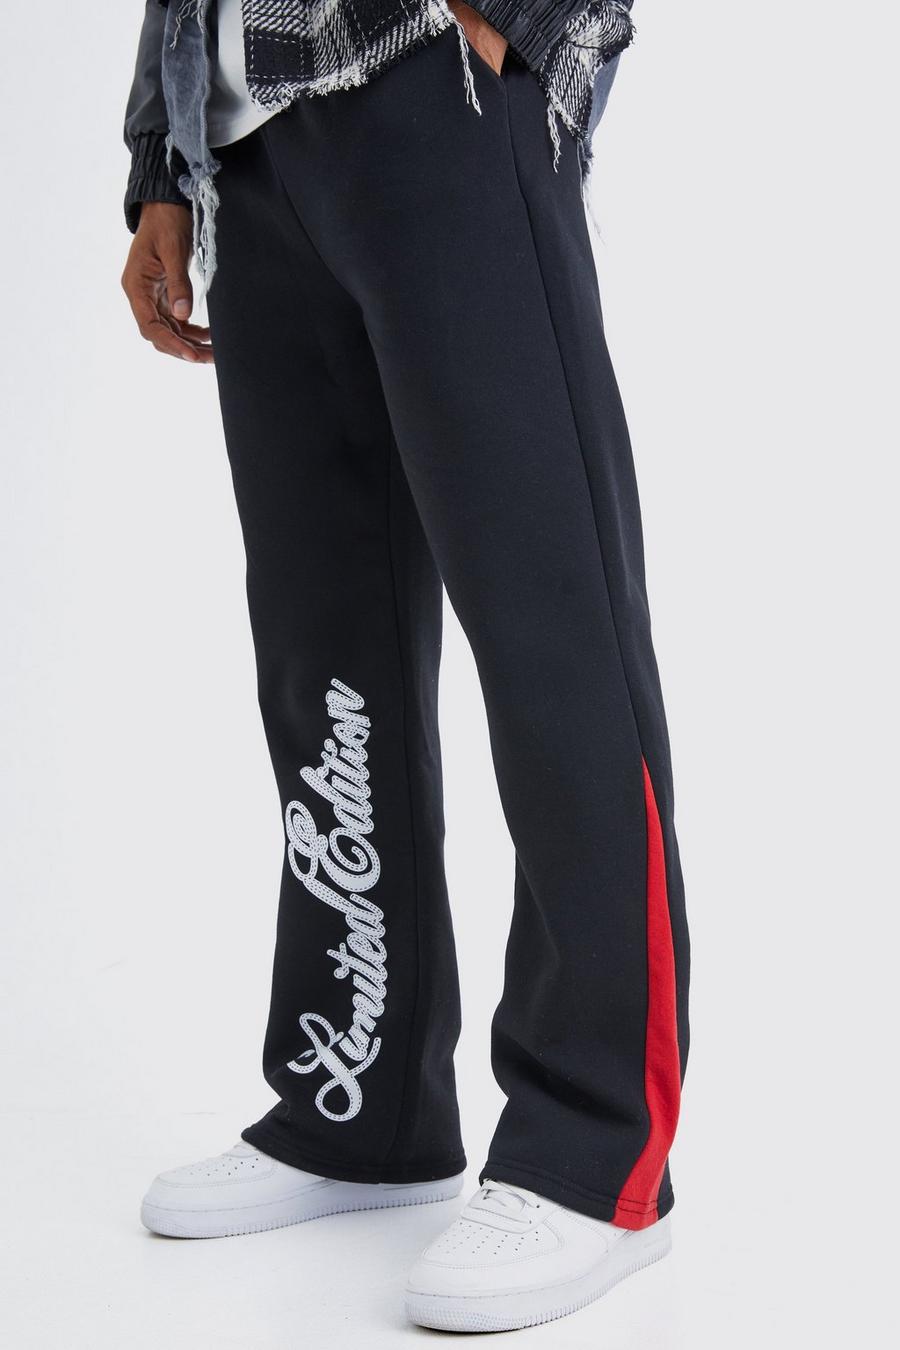 Pantalón deportivo Limited Edition con refuerzos, Black